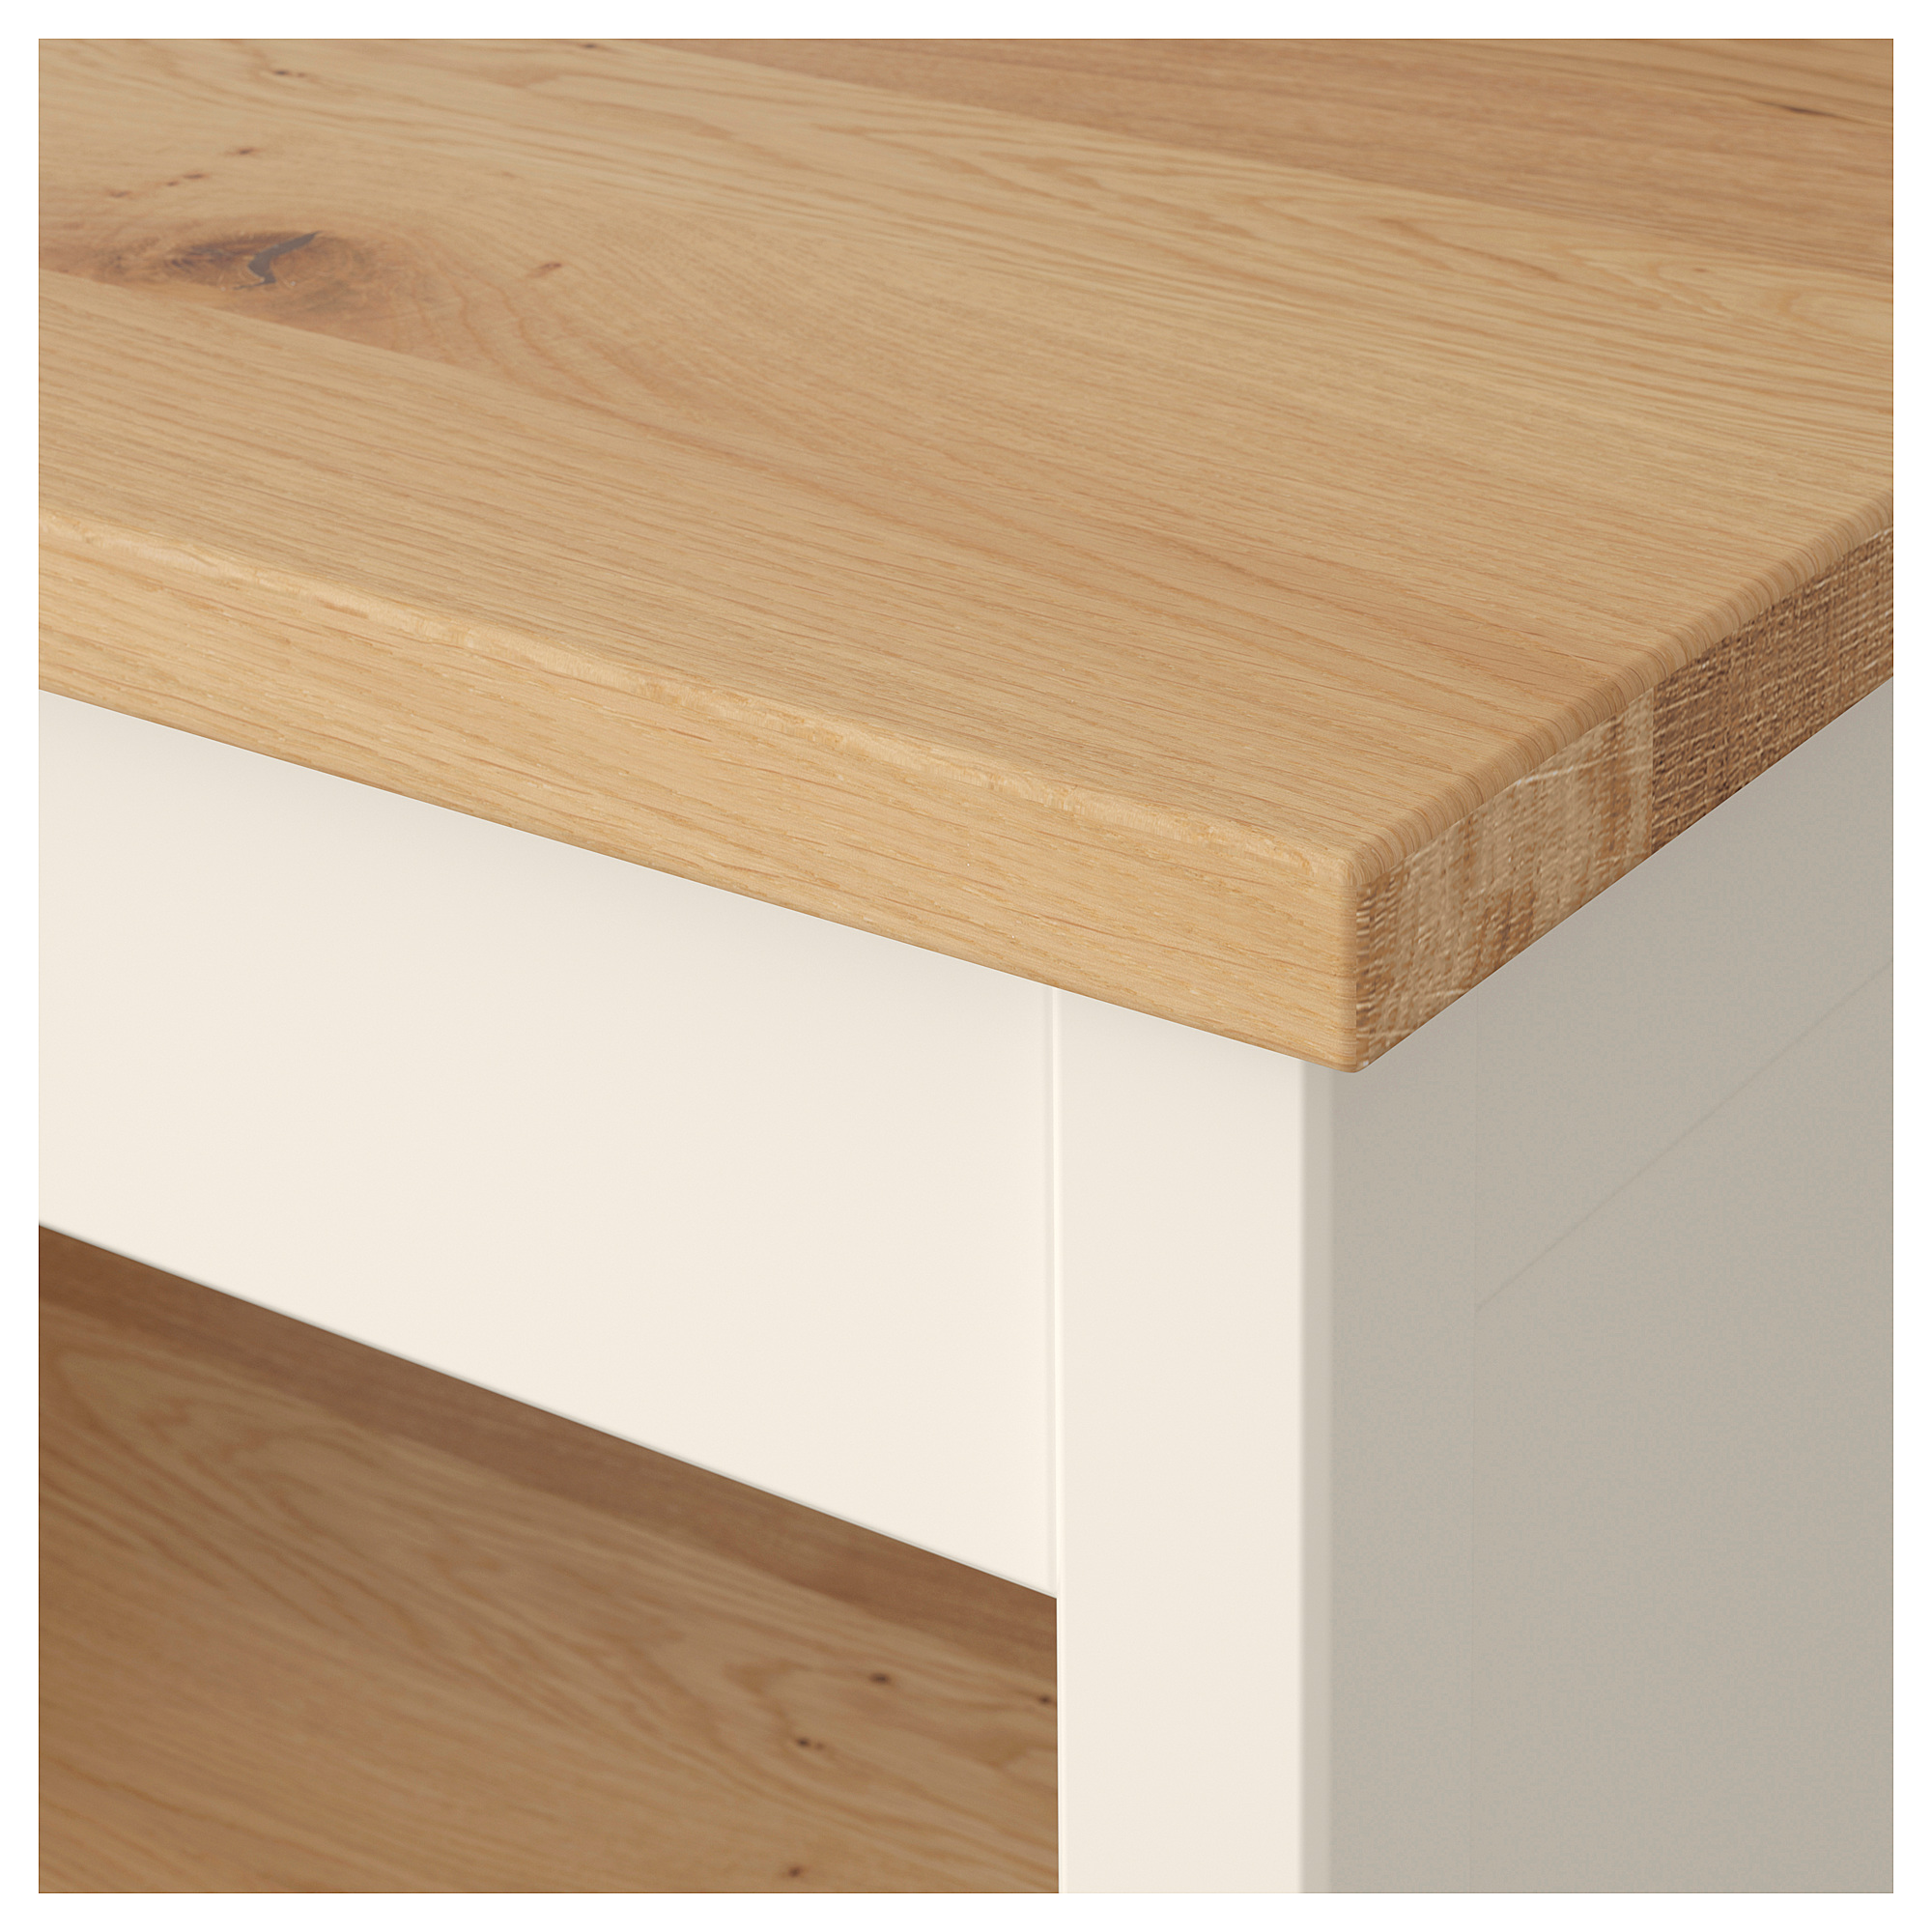 TORNVIKEN meja tengah dapur, putih pudar/kayu oak | IKEA ...